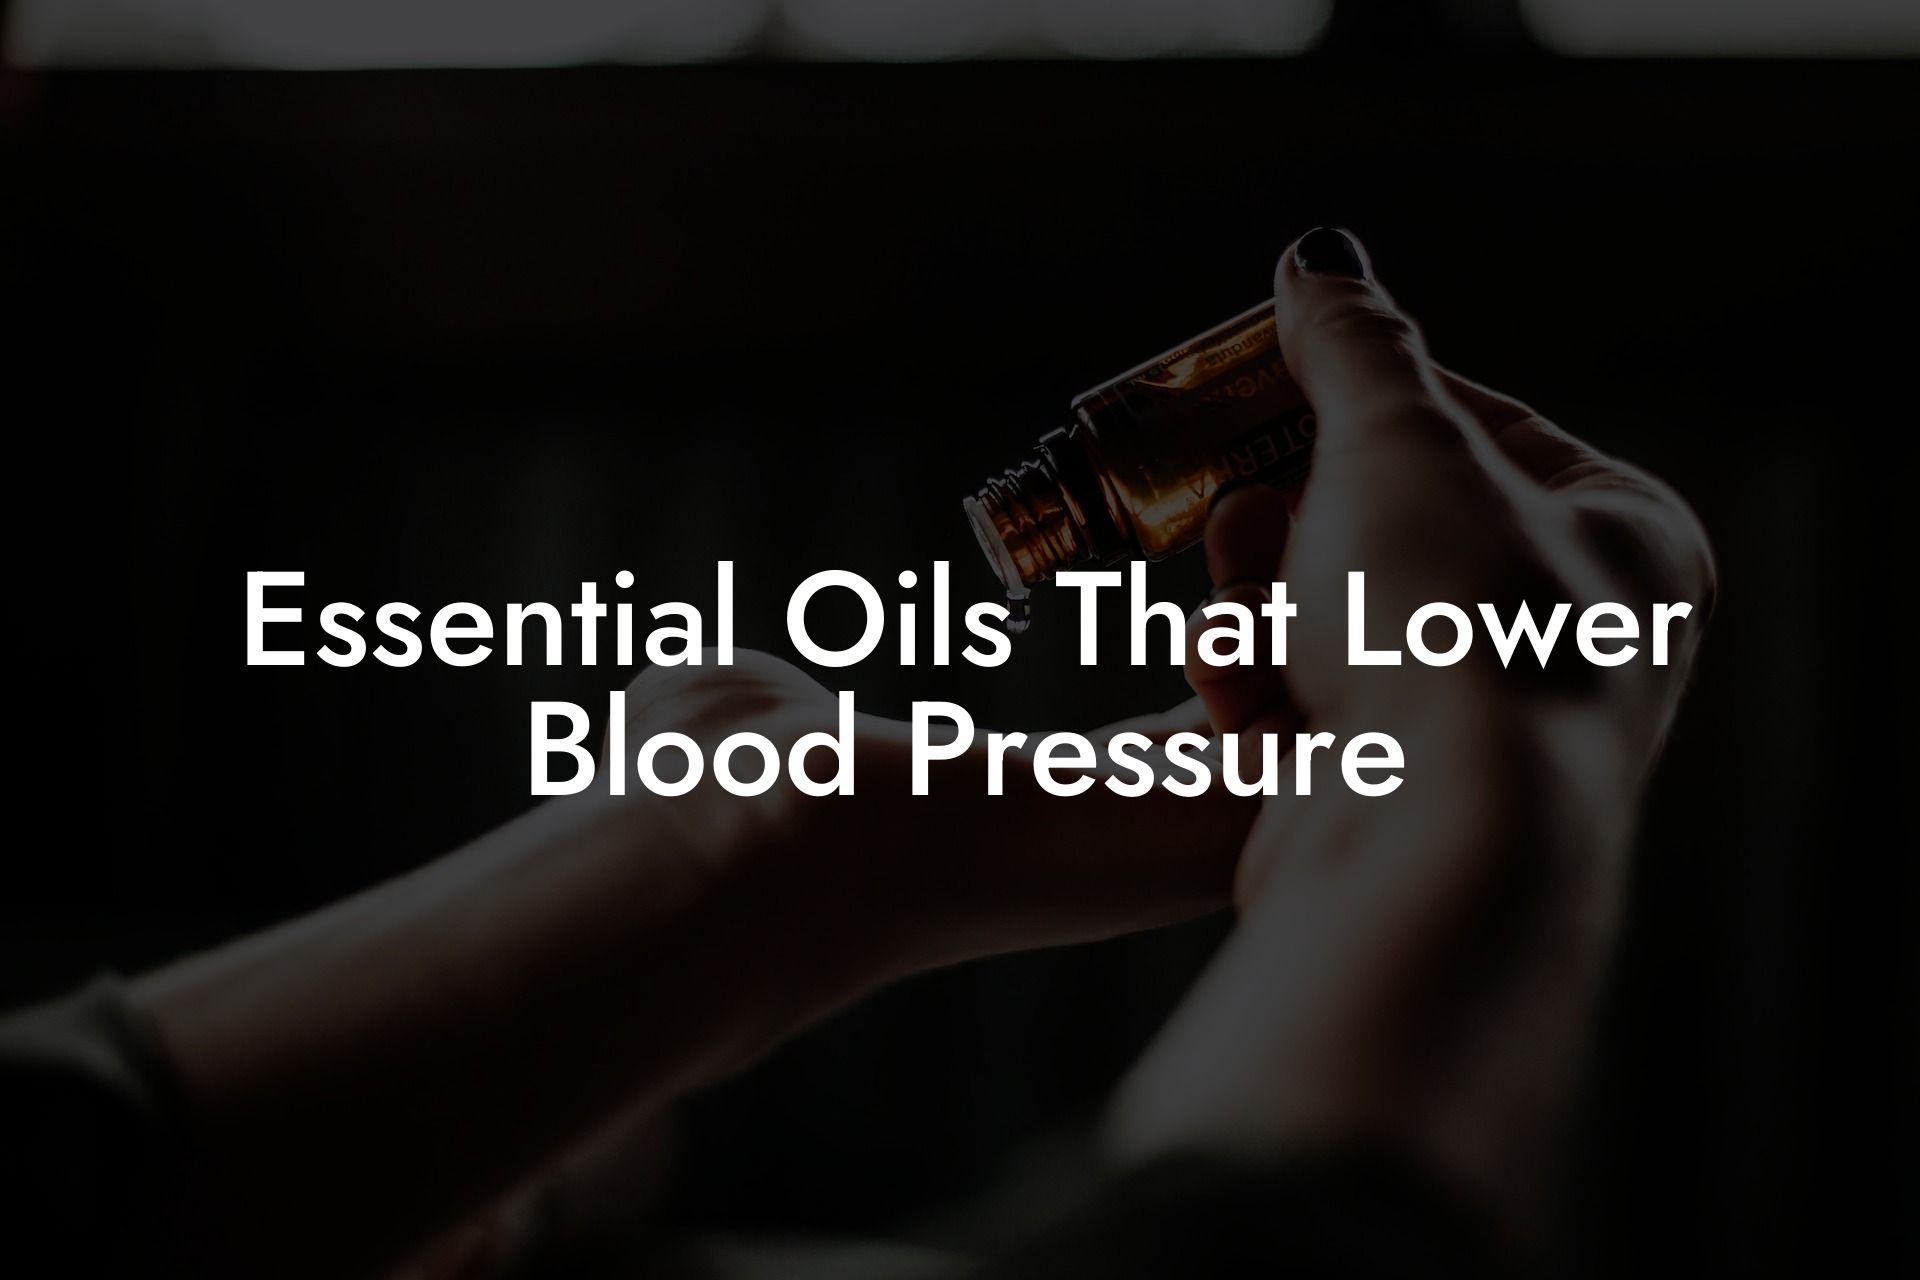 Essential Oils That Lower Blood Pressure